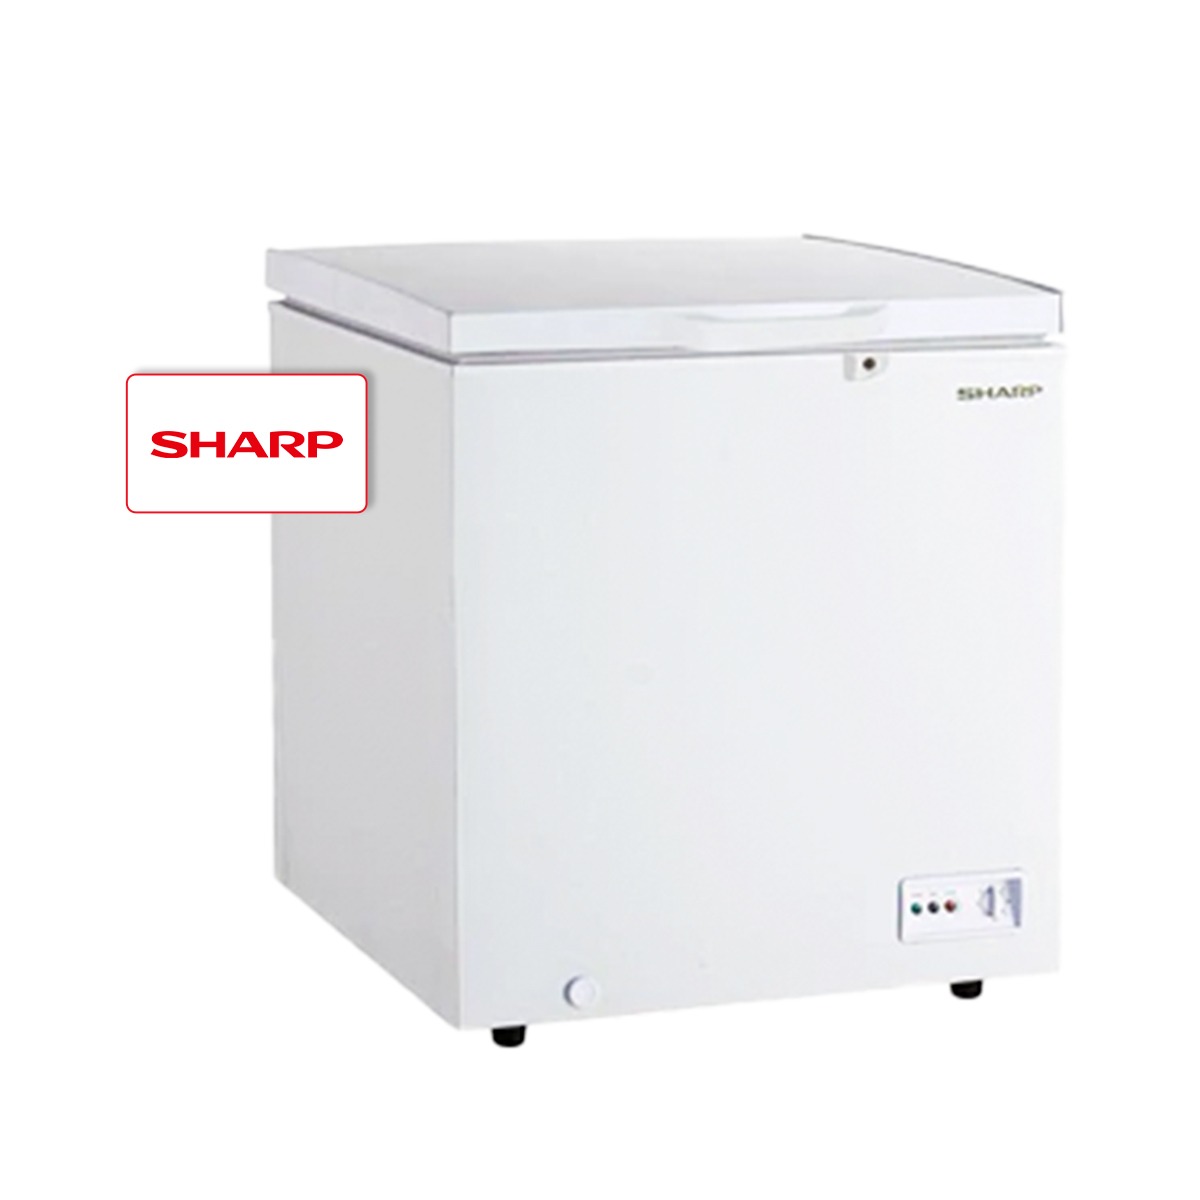 Cader Electromeubles - Sharp 140L